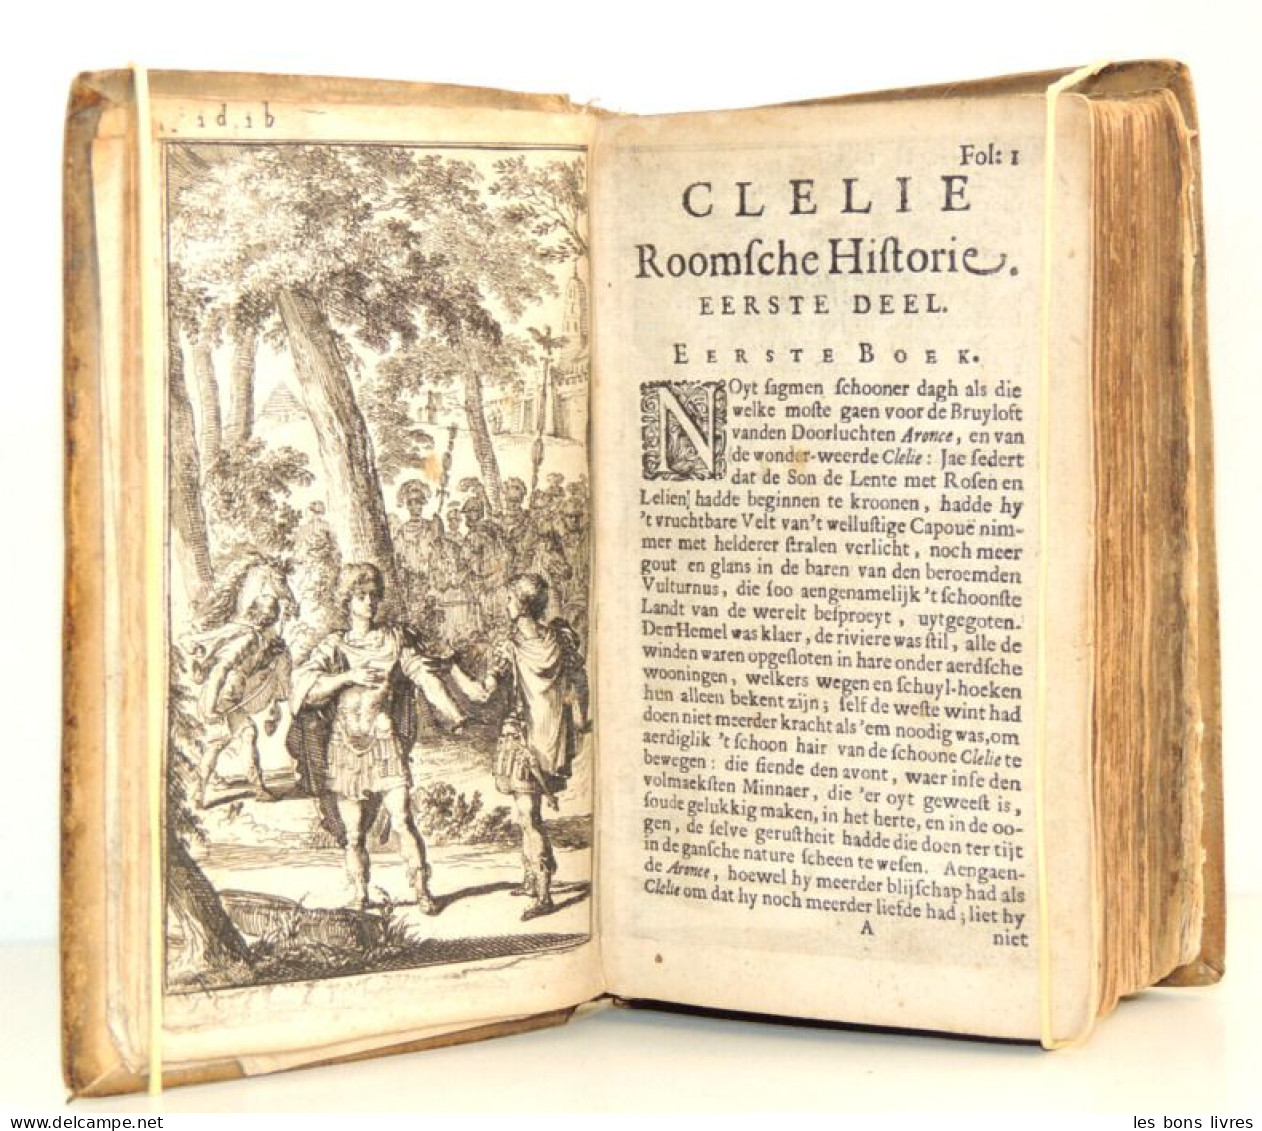 1676. De Scudery. Clélie, roomsche historie I & II ( rarissime)